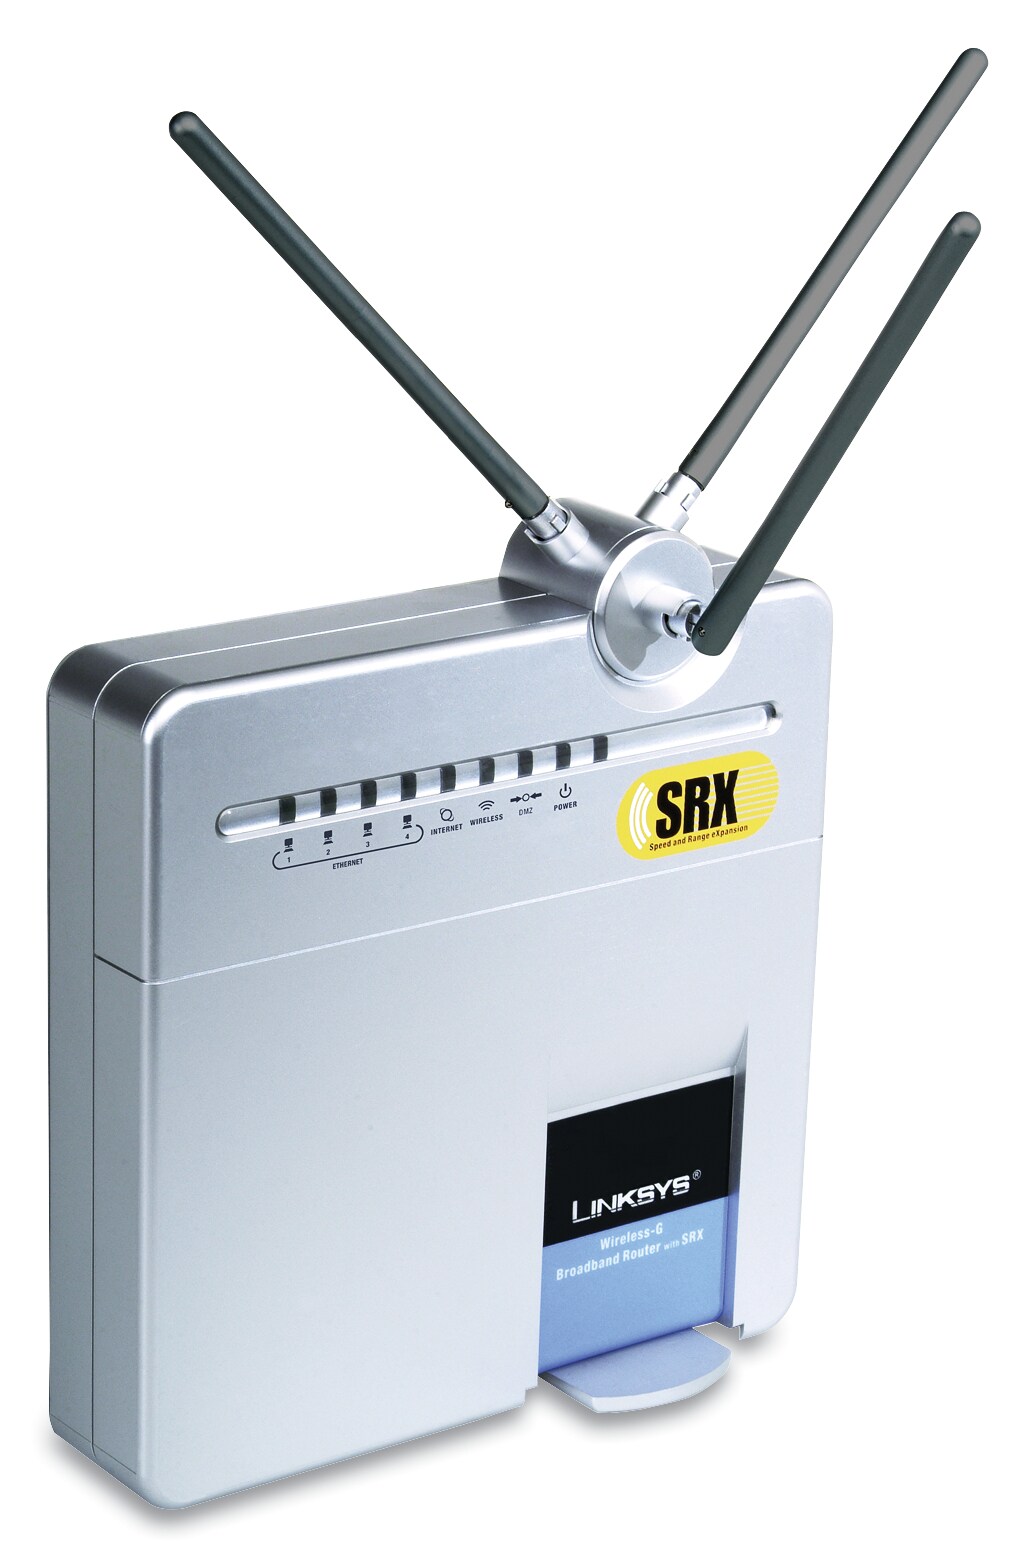 Linksys Wireless-G Broadband Router with SRX						
